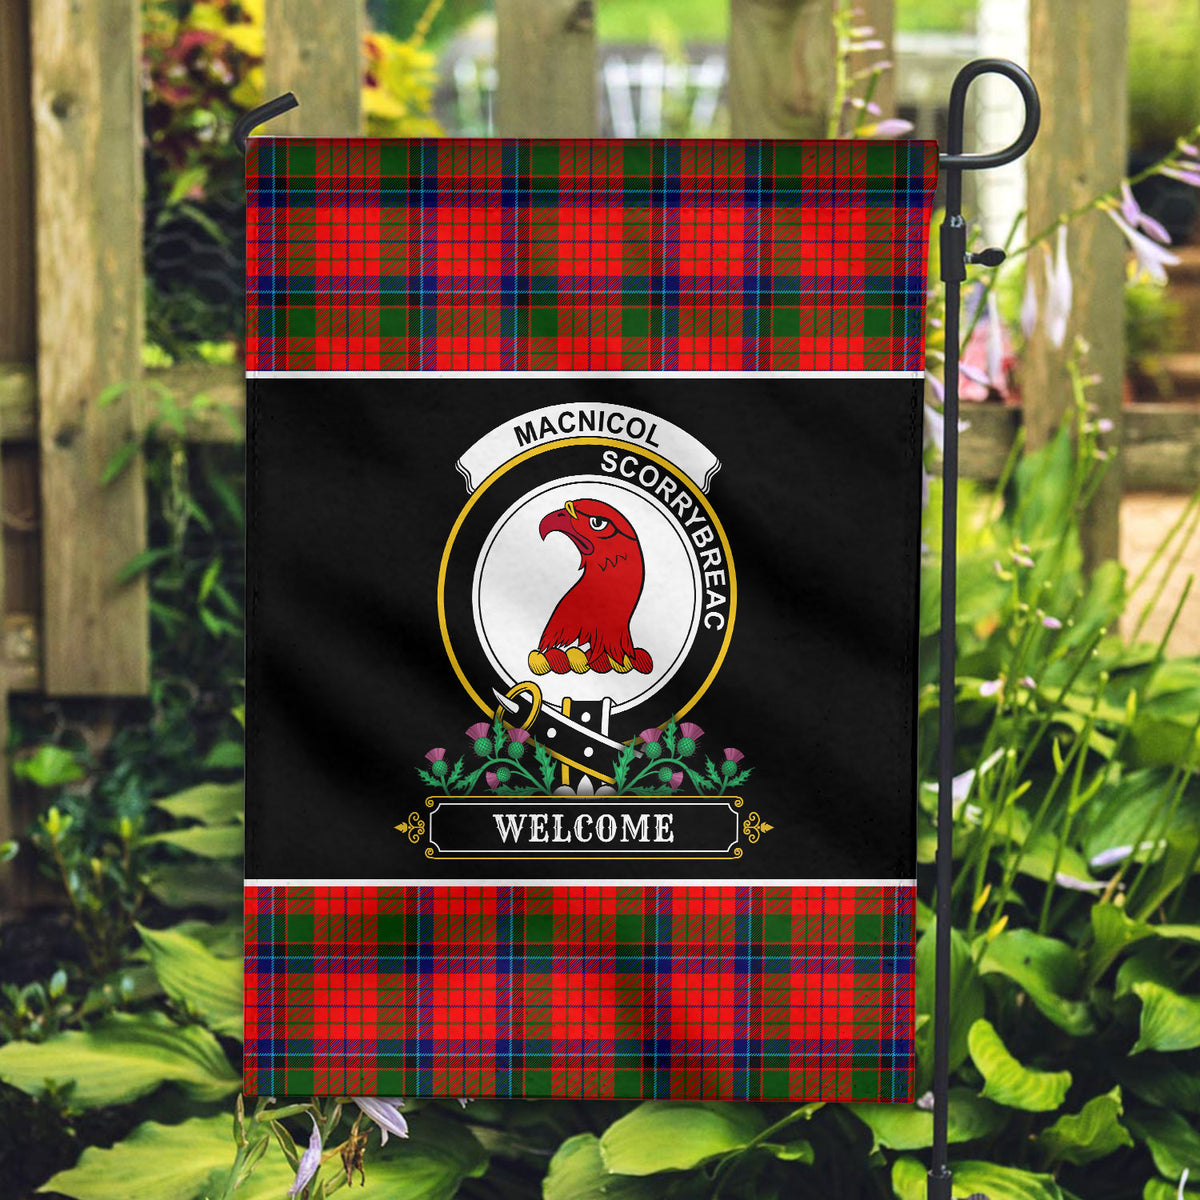 MacNicol (of Scorrybreac) Tartan Crest Garden Flag - Welcome Style